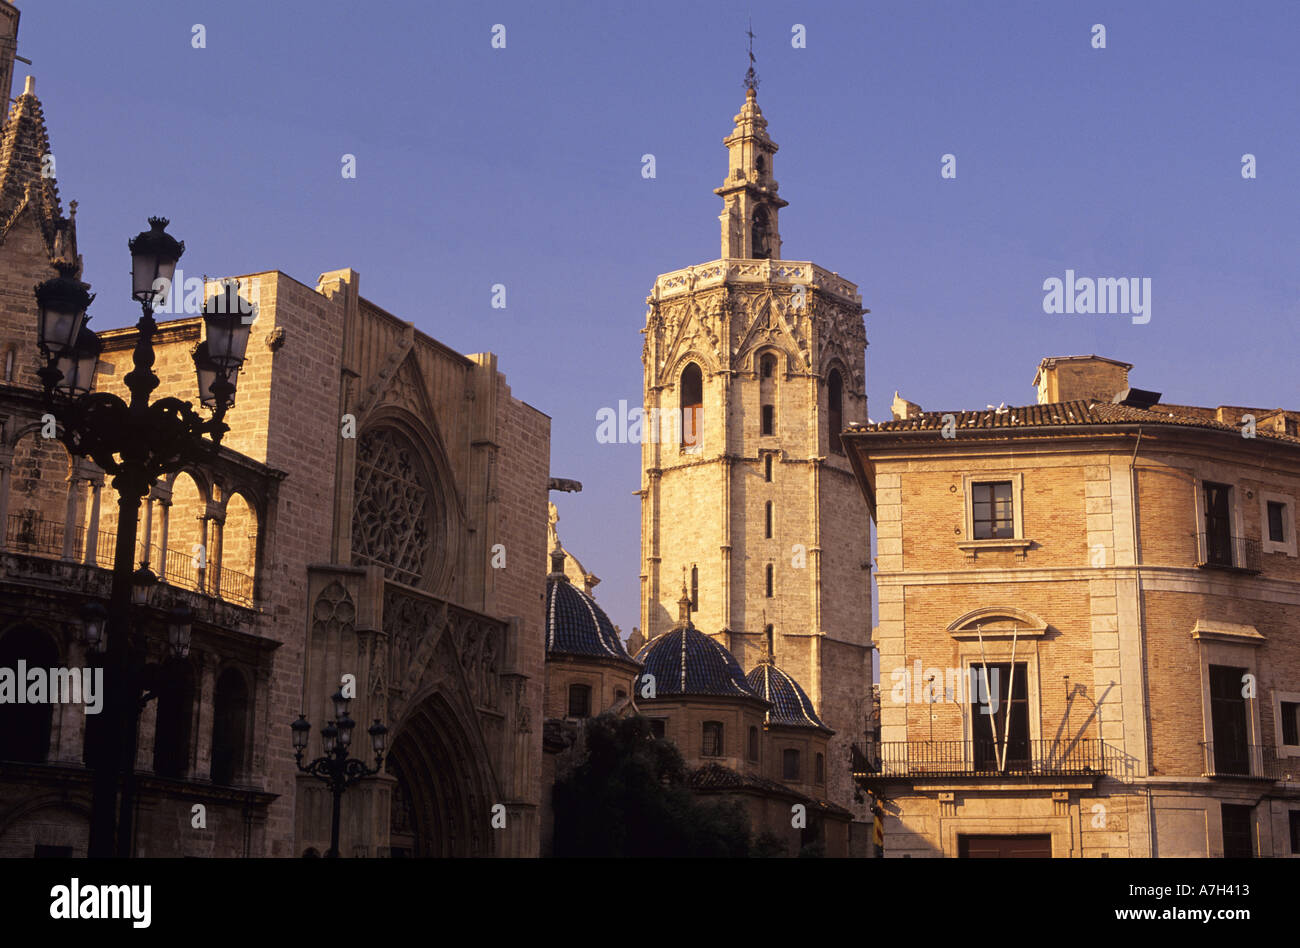 Plaza De La Virgen und Miguelete Turm Valencia, Spanien Stockfoto